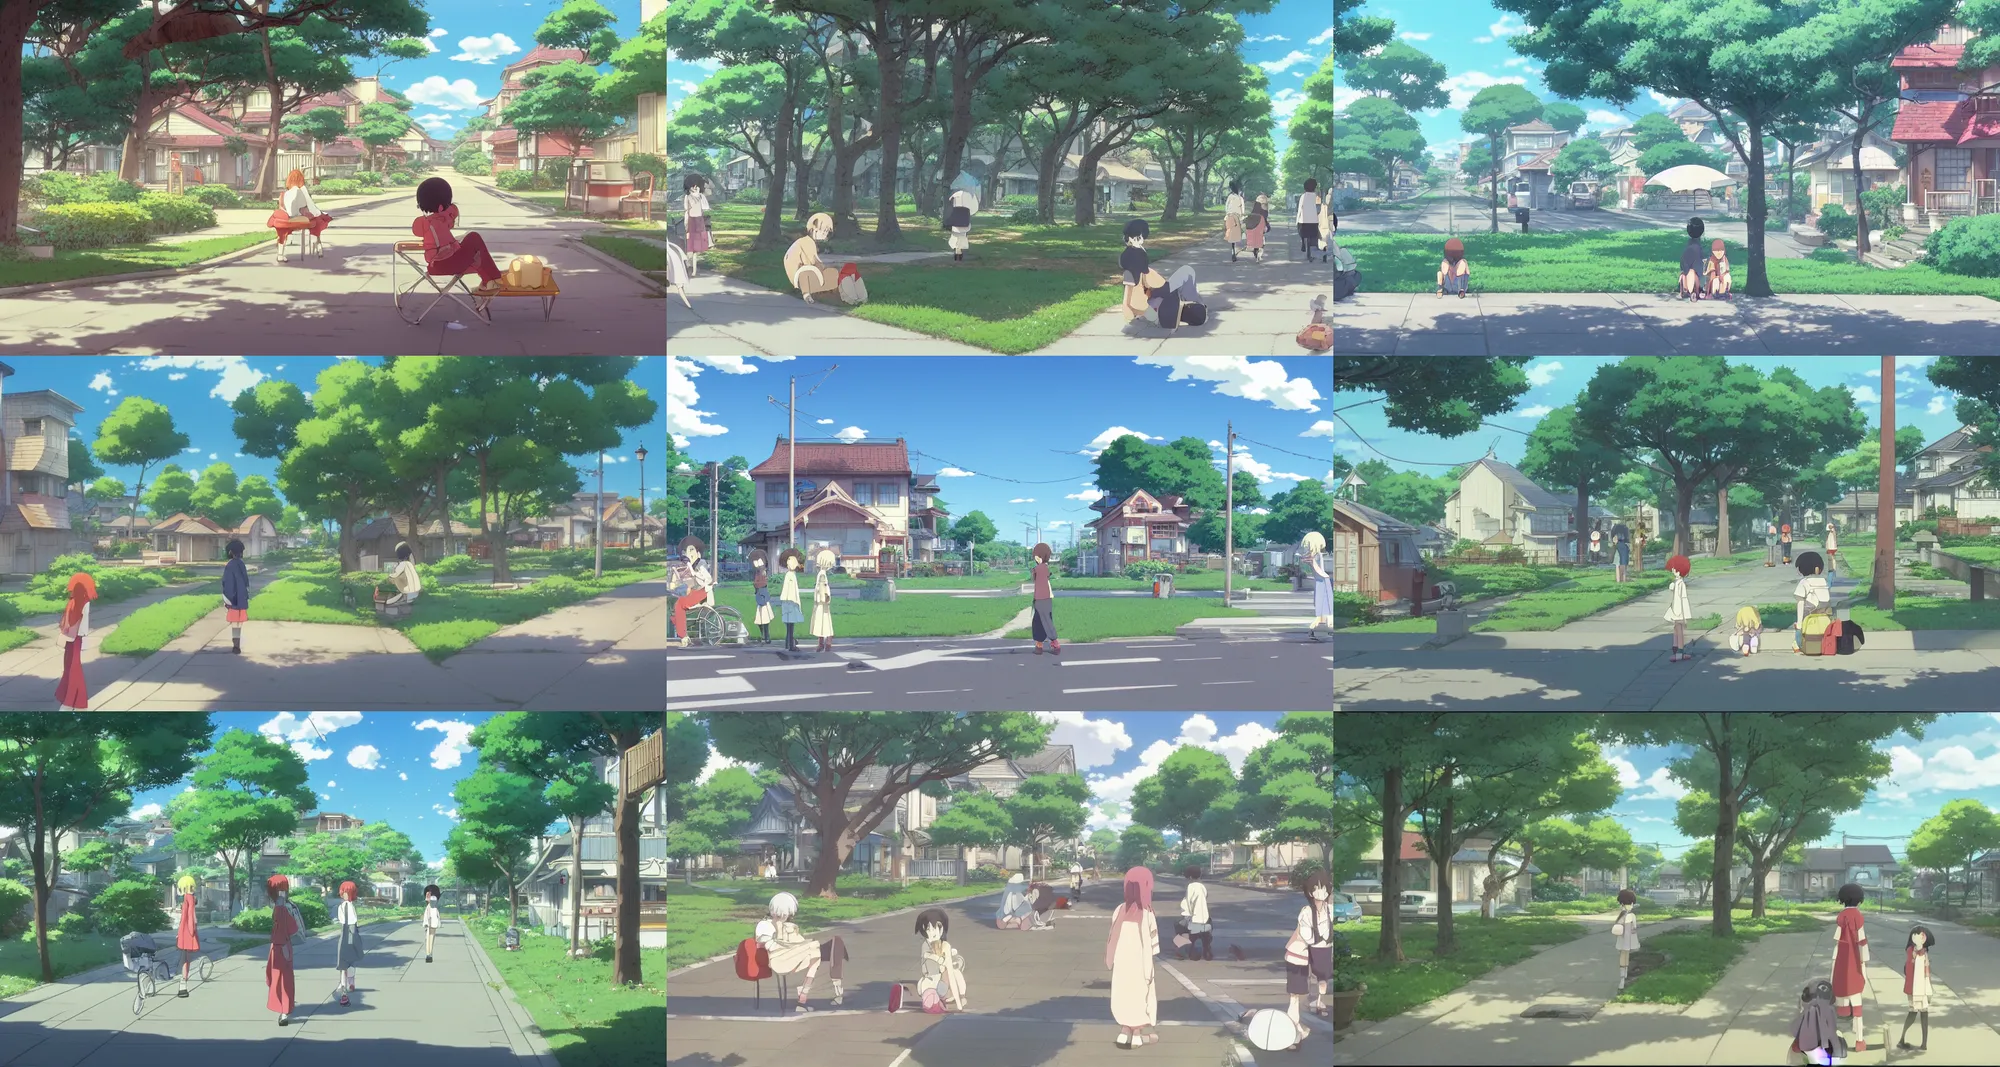 Prompt: beautiful slice of life anime scene of suburban street, relaxing, calm, cozy, peaceful, by mamoru hosoda, hayao miyazaki, makoto shinkai